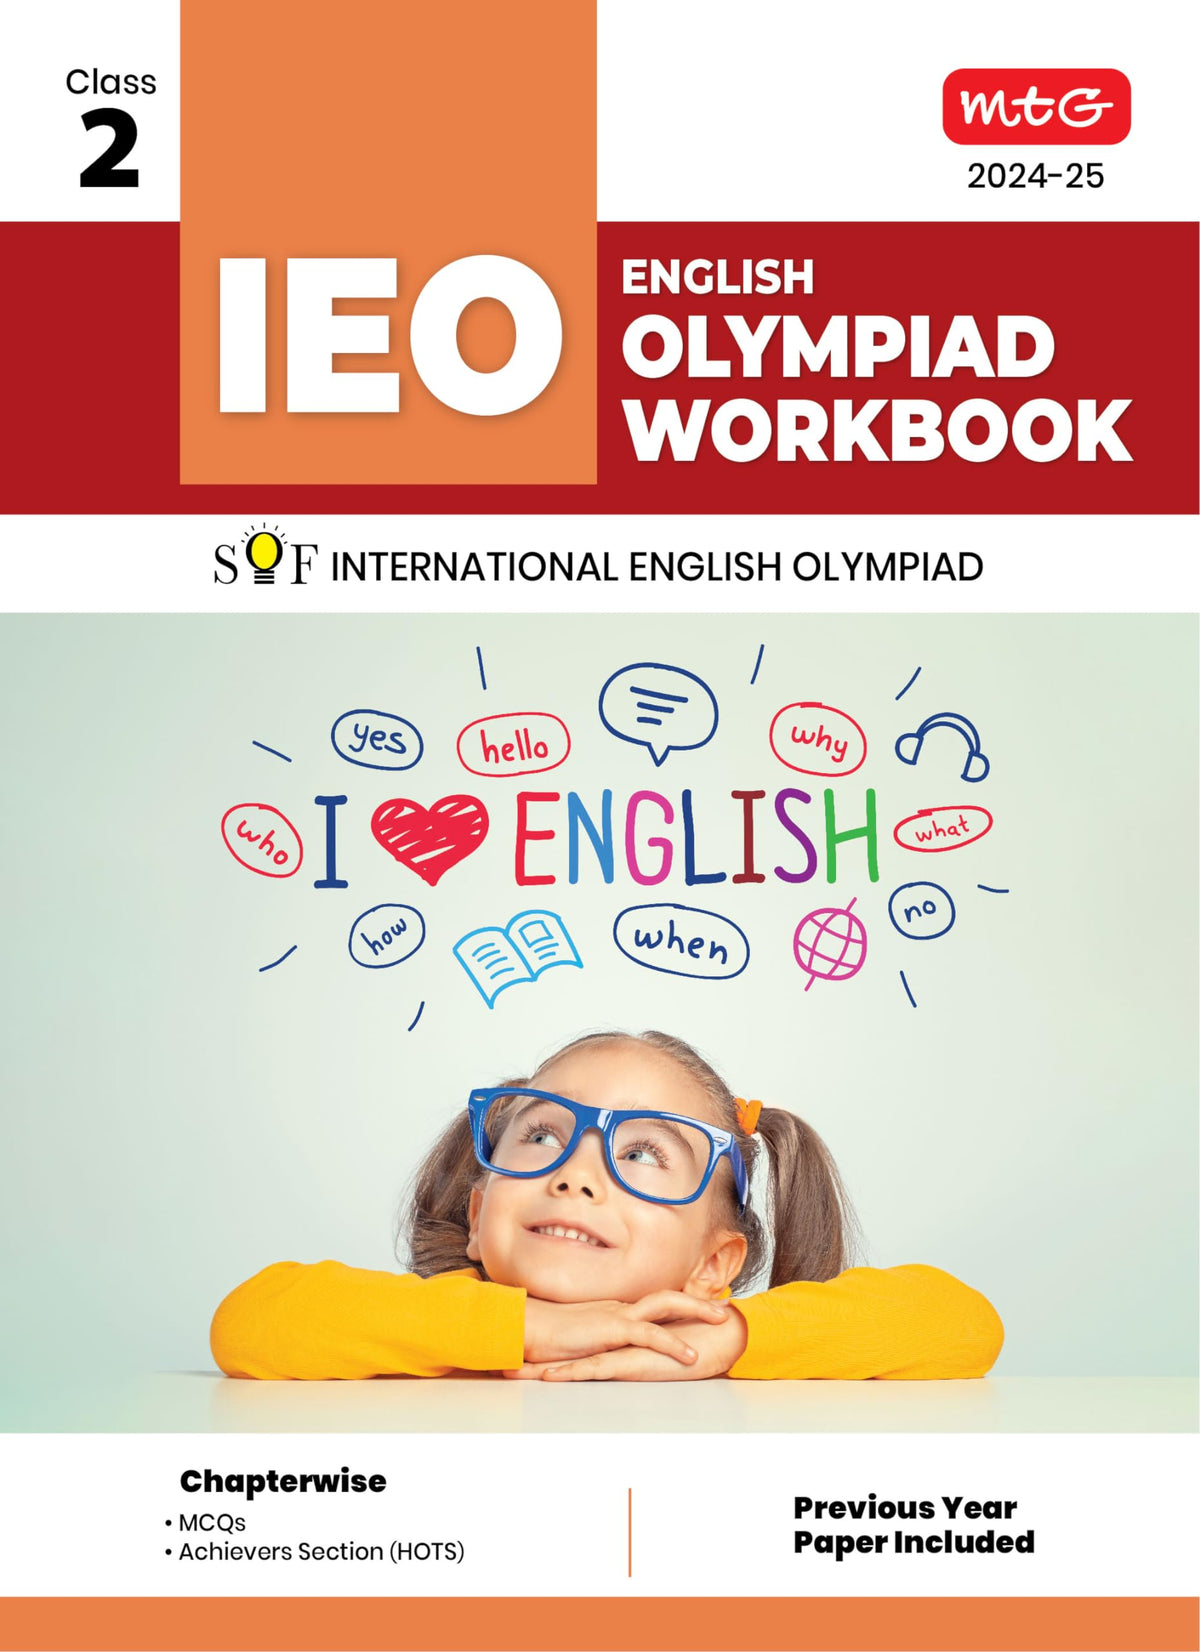 MTG ENGLISH OLYMPIAD WORKBOOK IEO 2